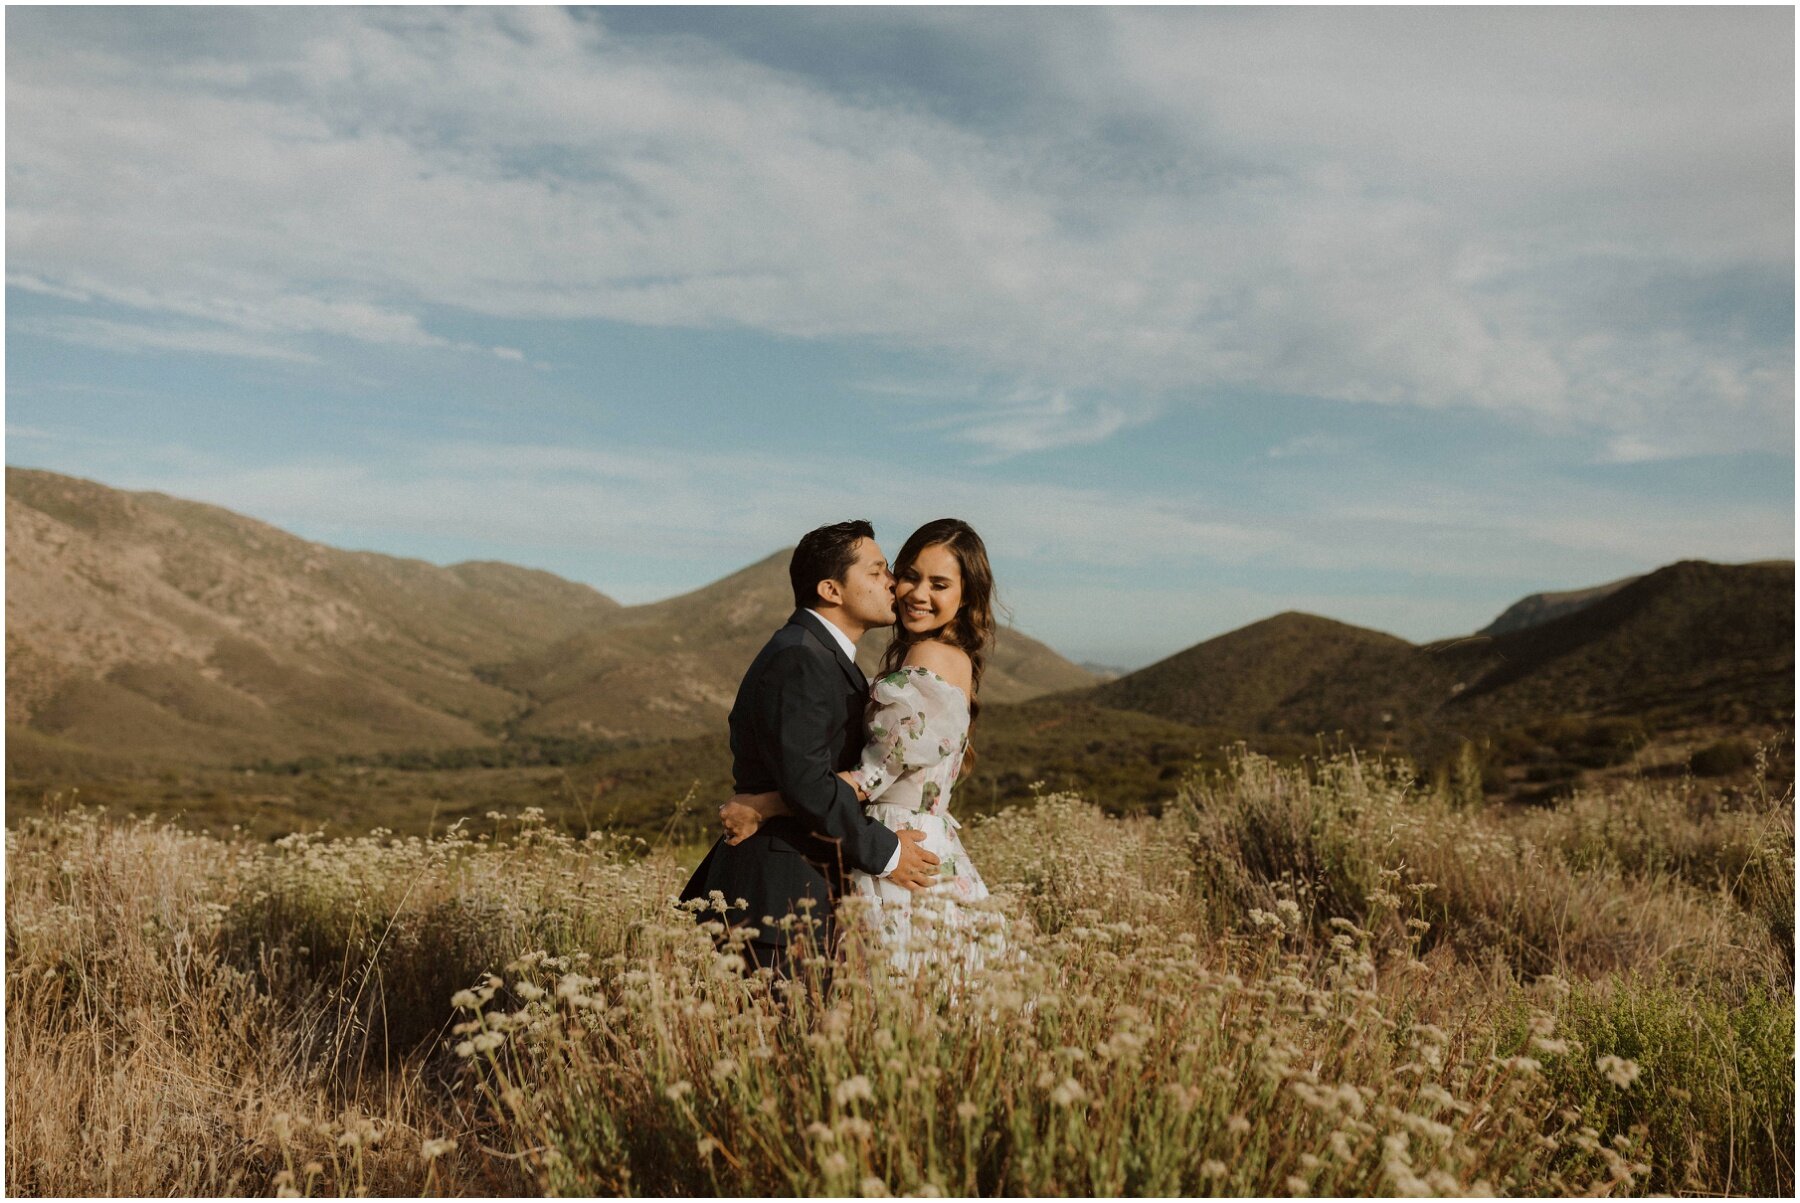 desert engagement session in california - erika greene photography - couples photographer_0001.jpg